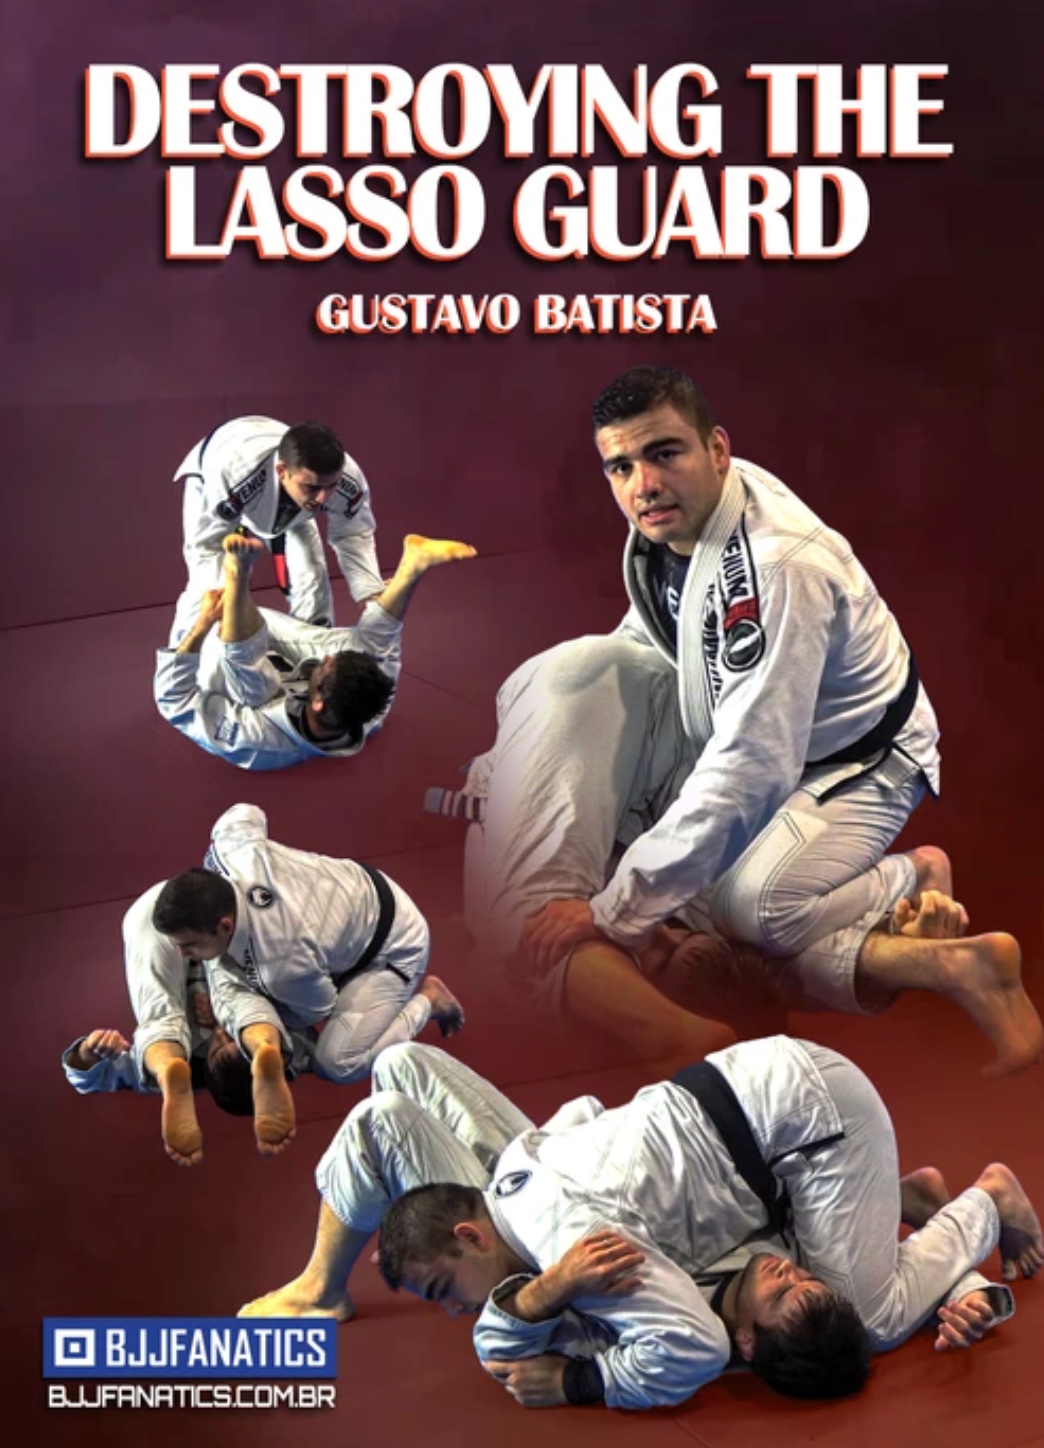 Destroying The Lasso Guard 4 DVD Set by Gustavo Batista - Budovideos Inc